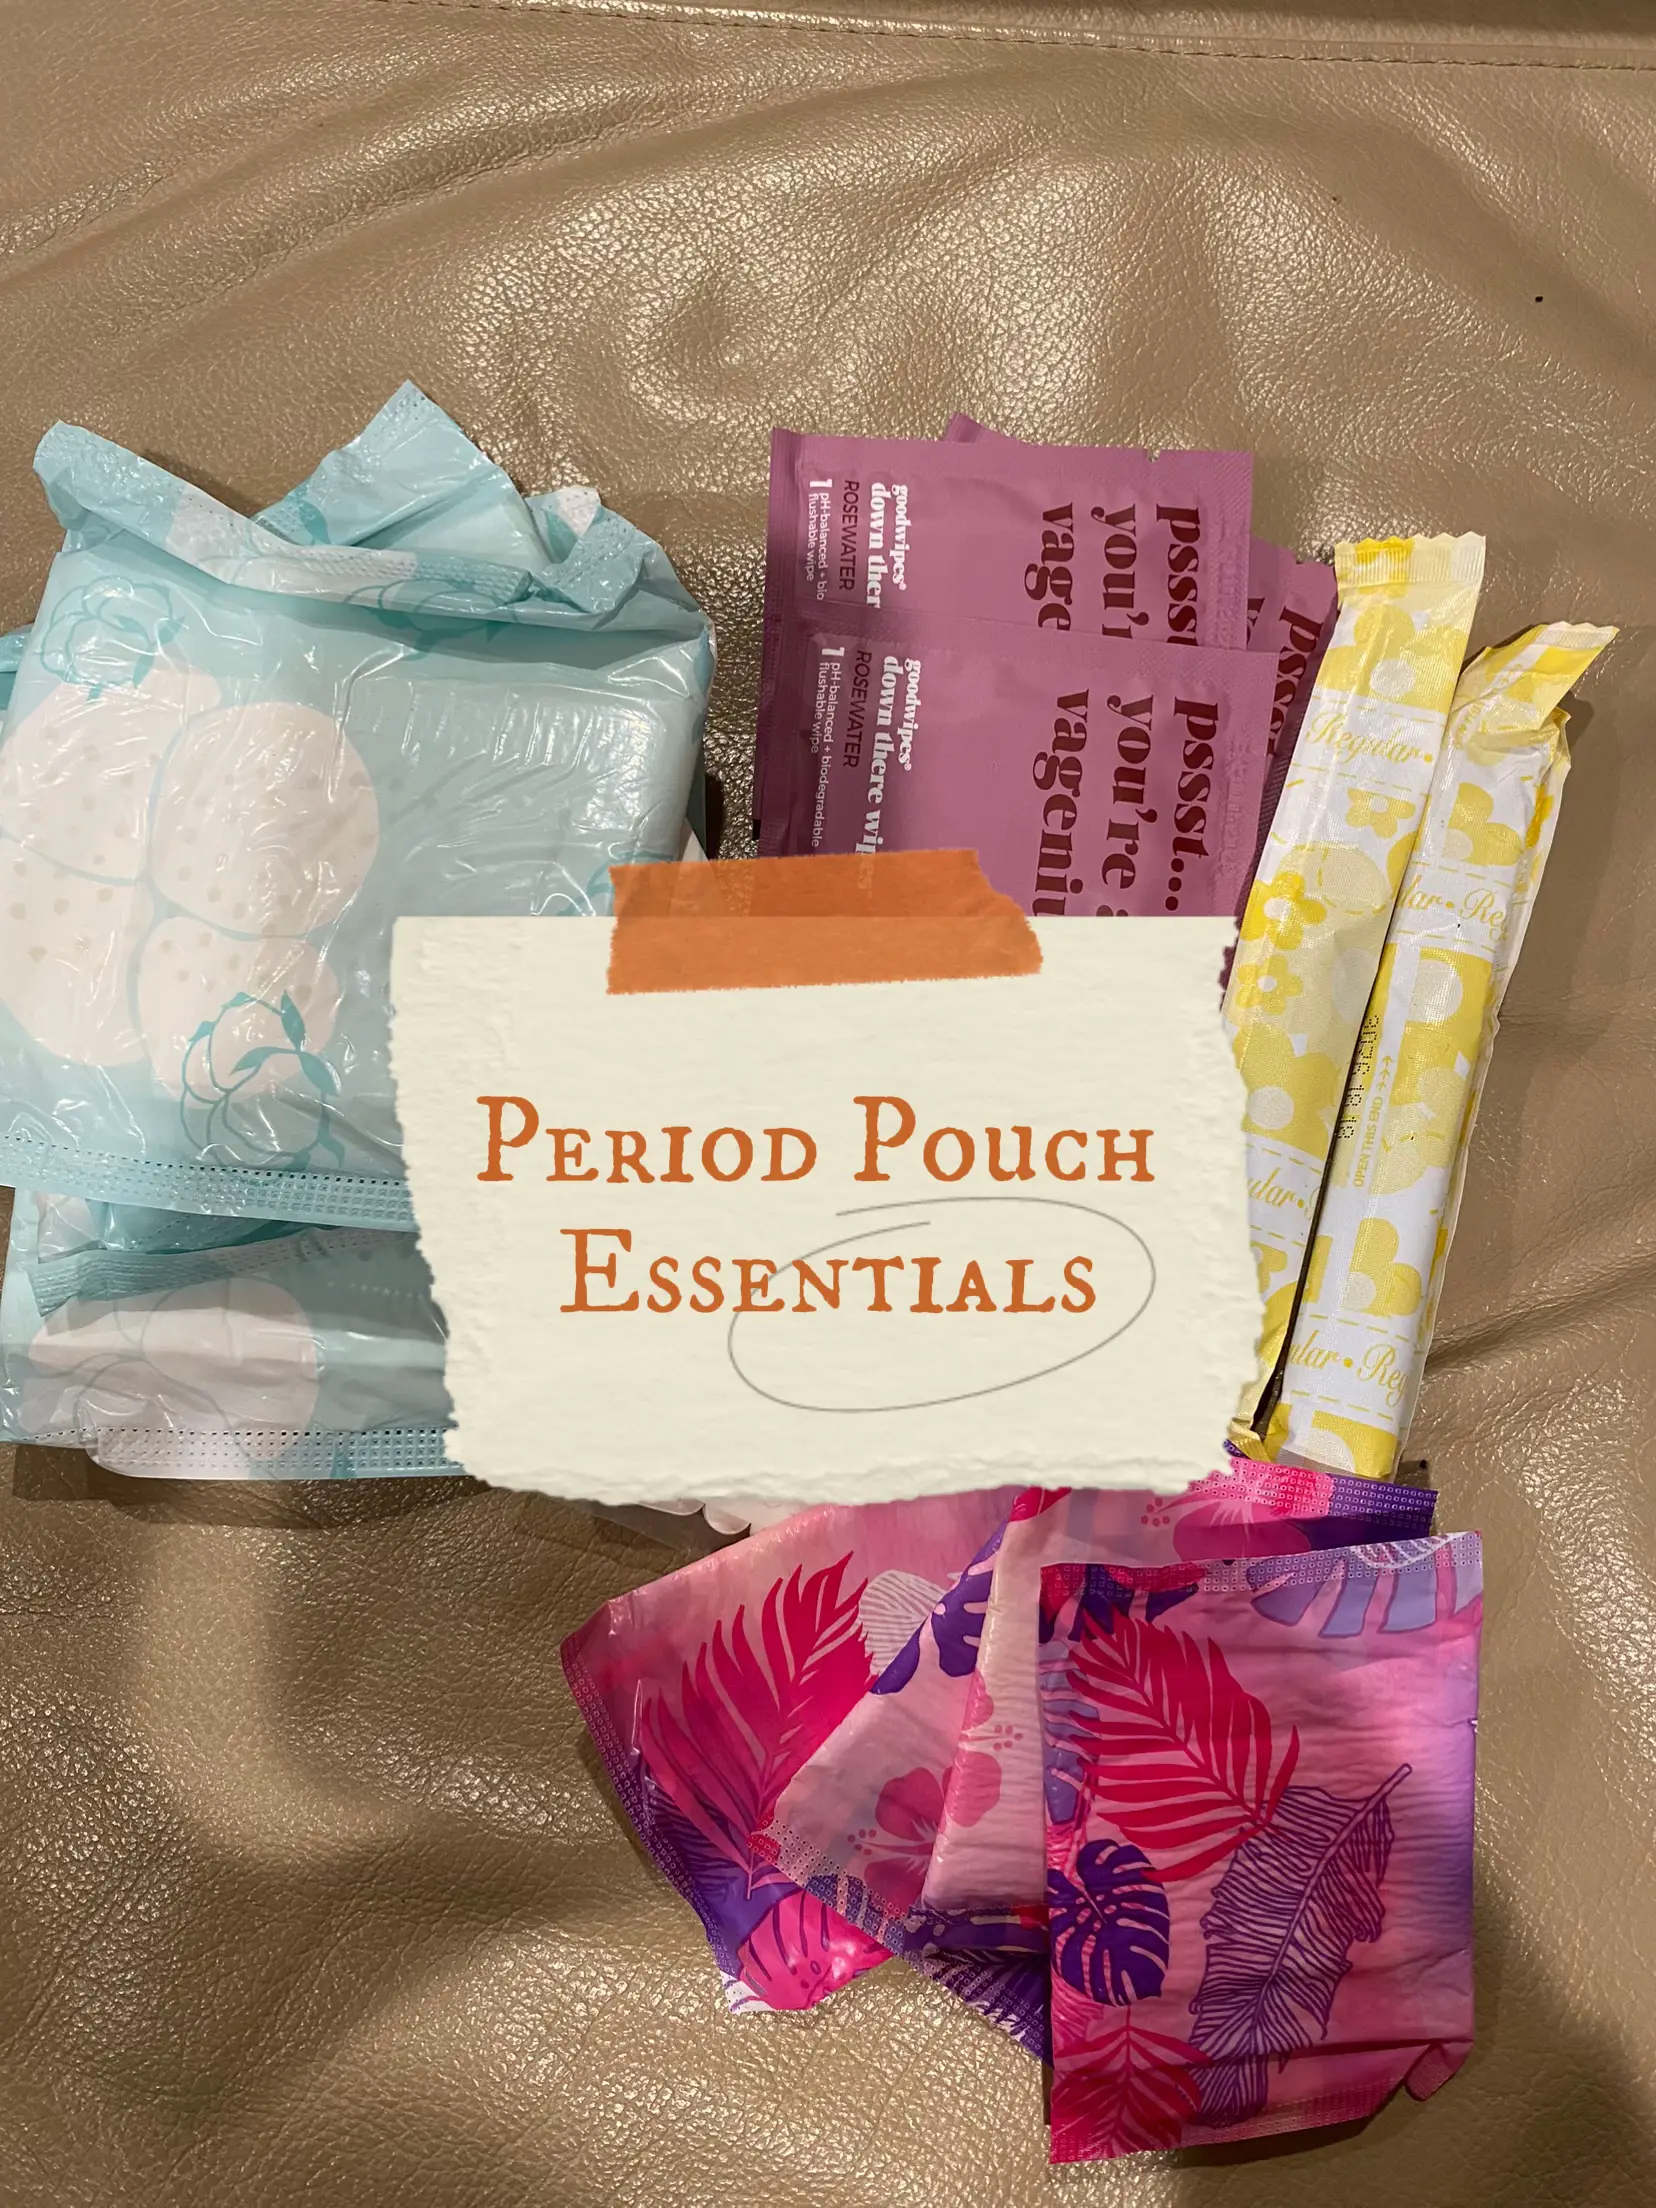 Period Kit Essentials - Lemon8 Search